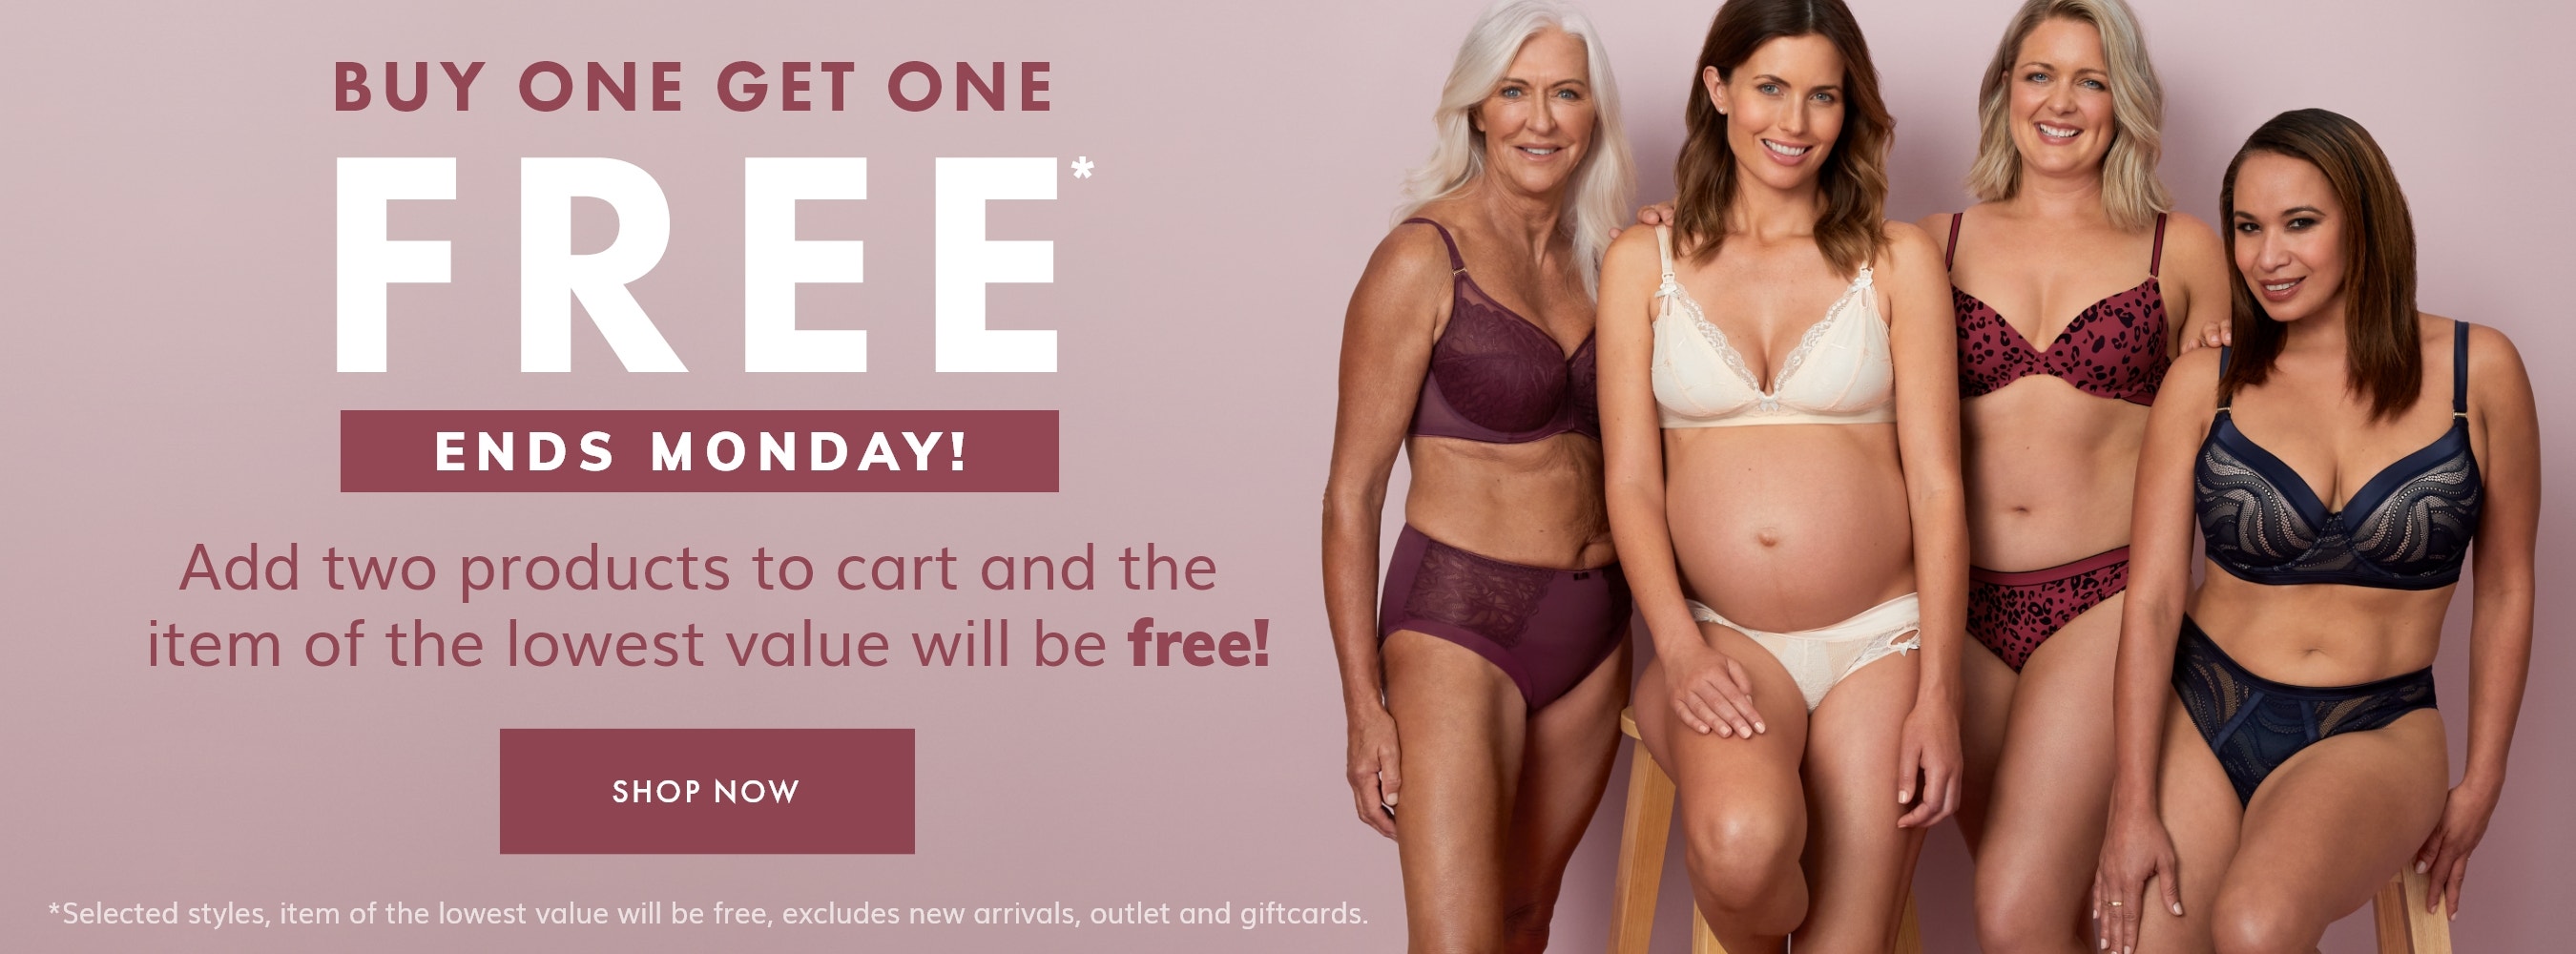 Buy one Get one FREE on bras, briefs, & sleepwear